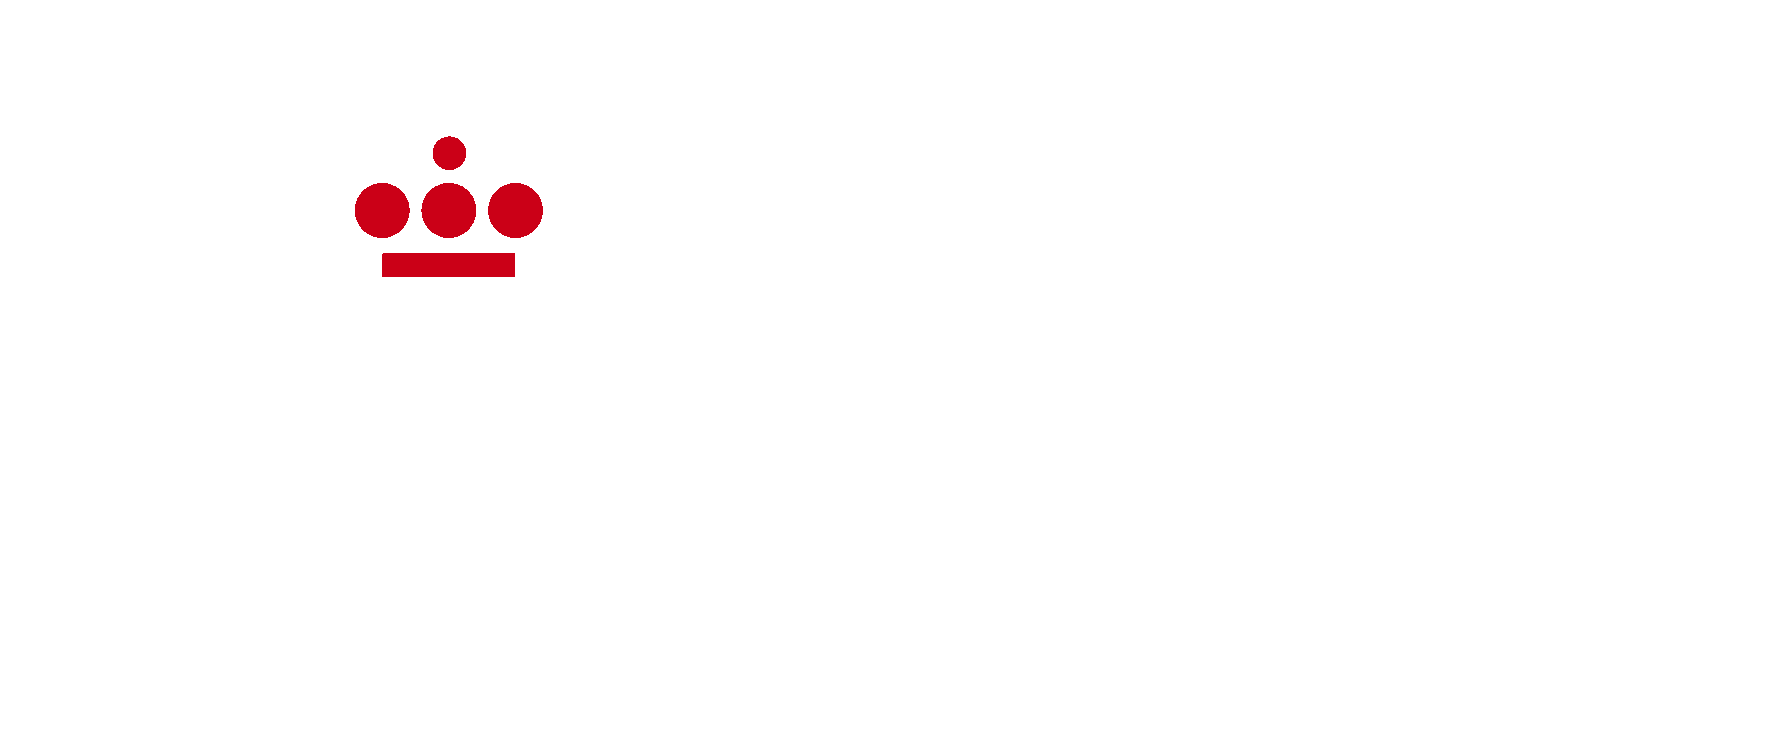 Universidad Rey Juan Carlos/>